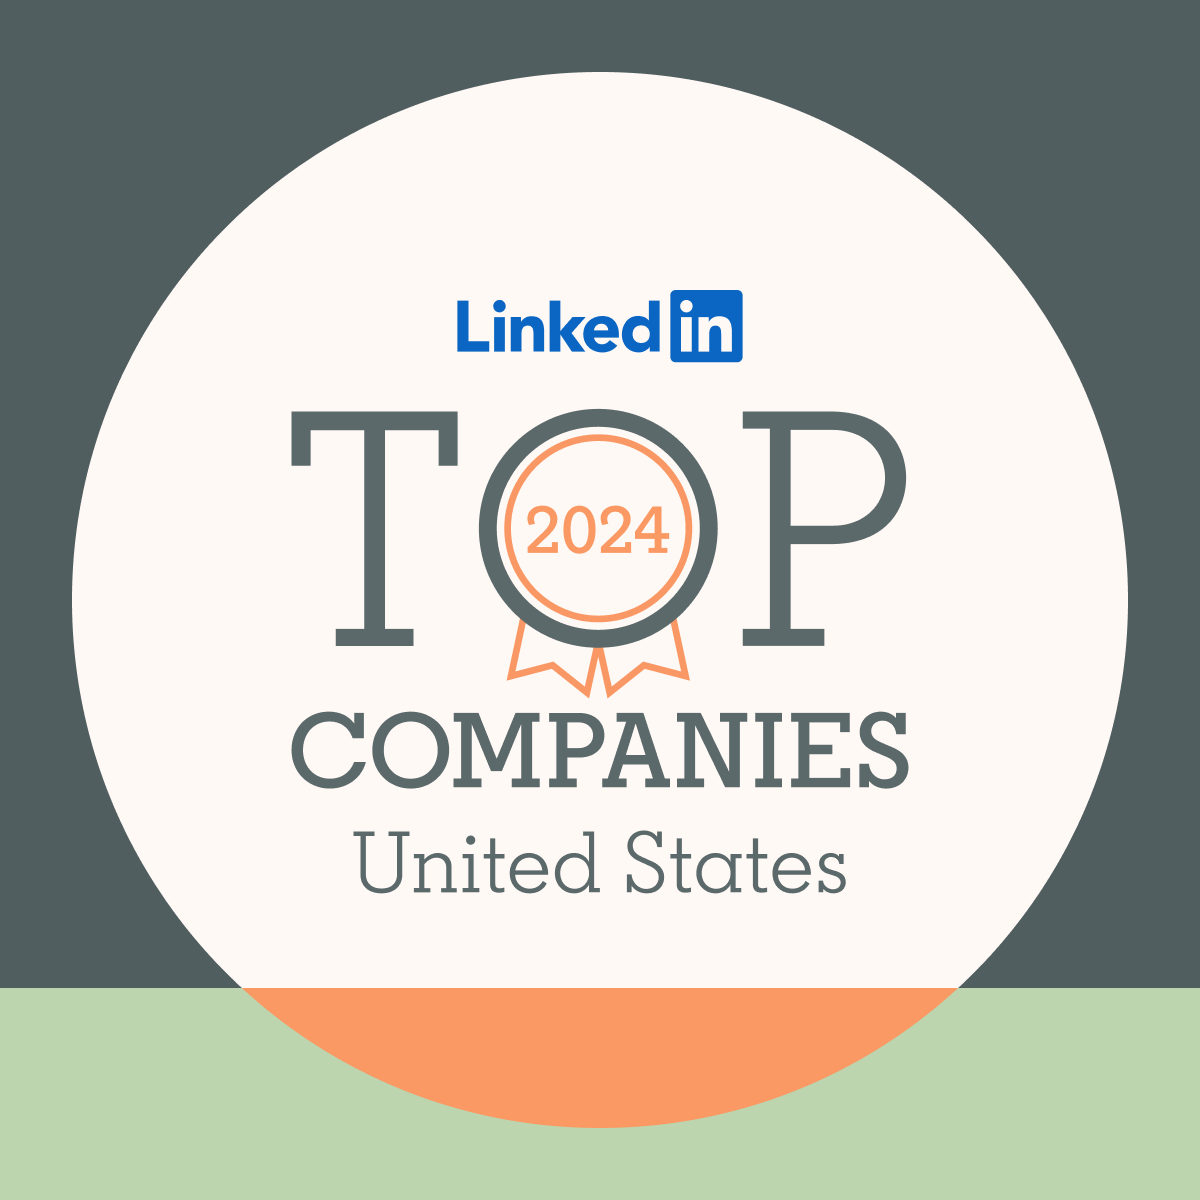 LinkedIn Top Companies United States 2024